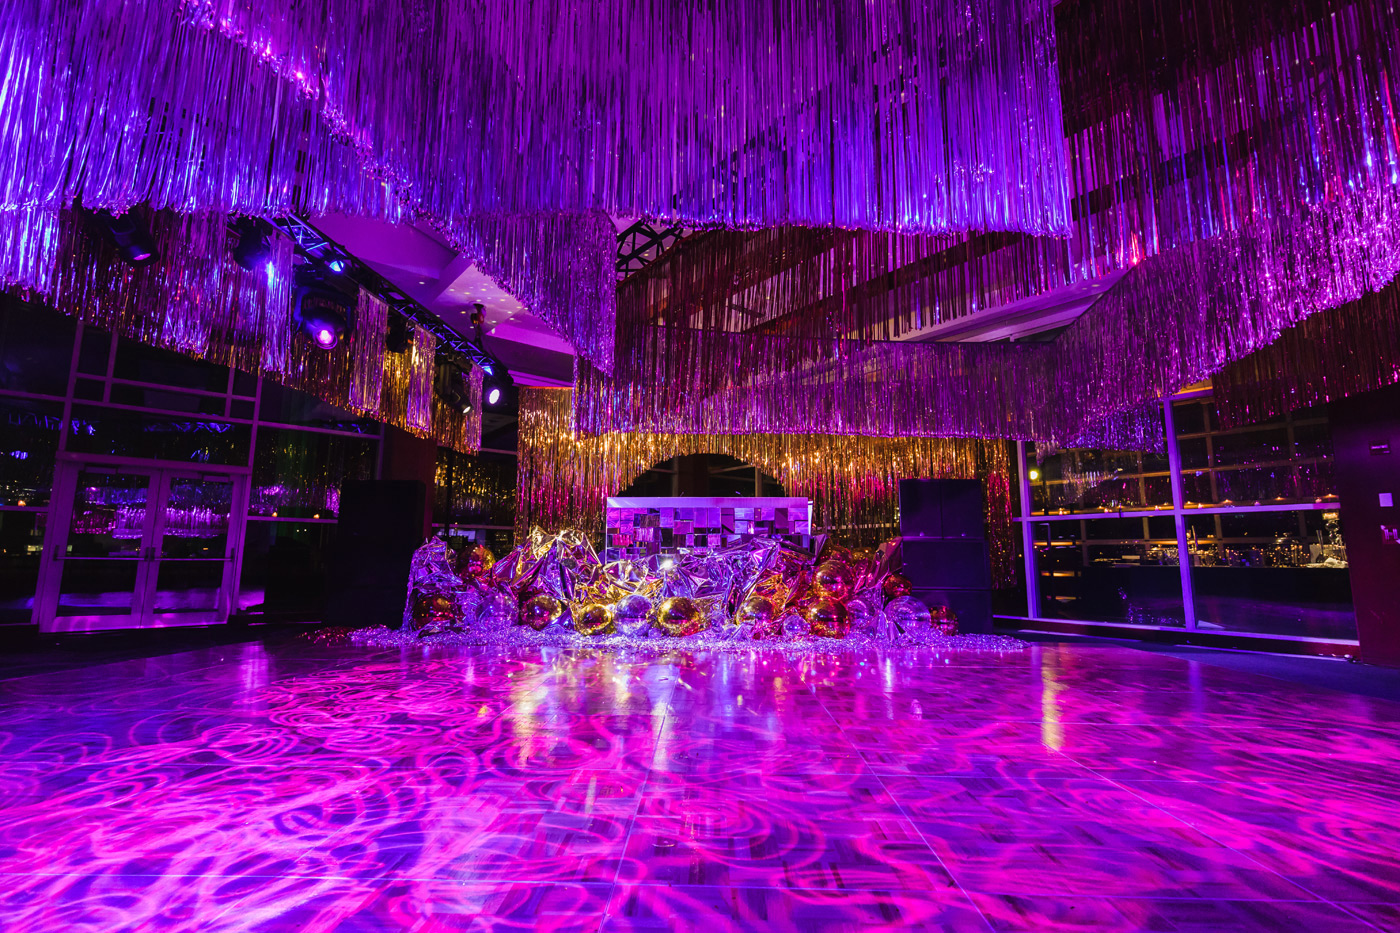 Tinsel hangs above purple-lit dance floor